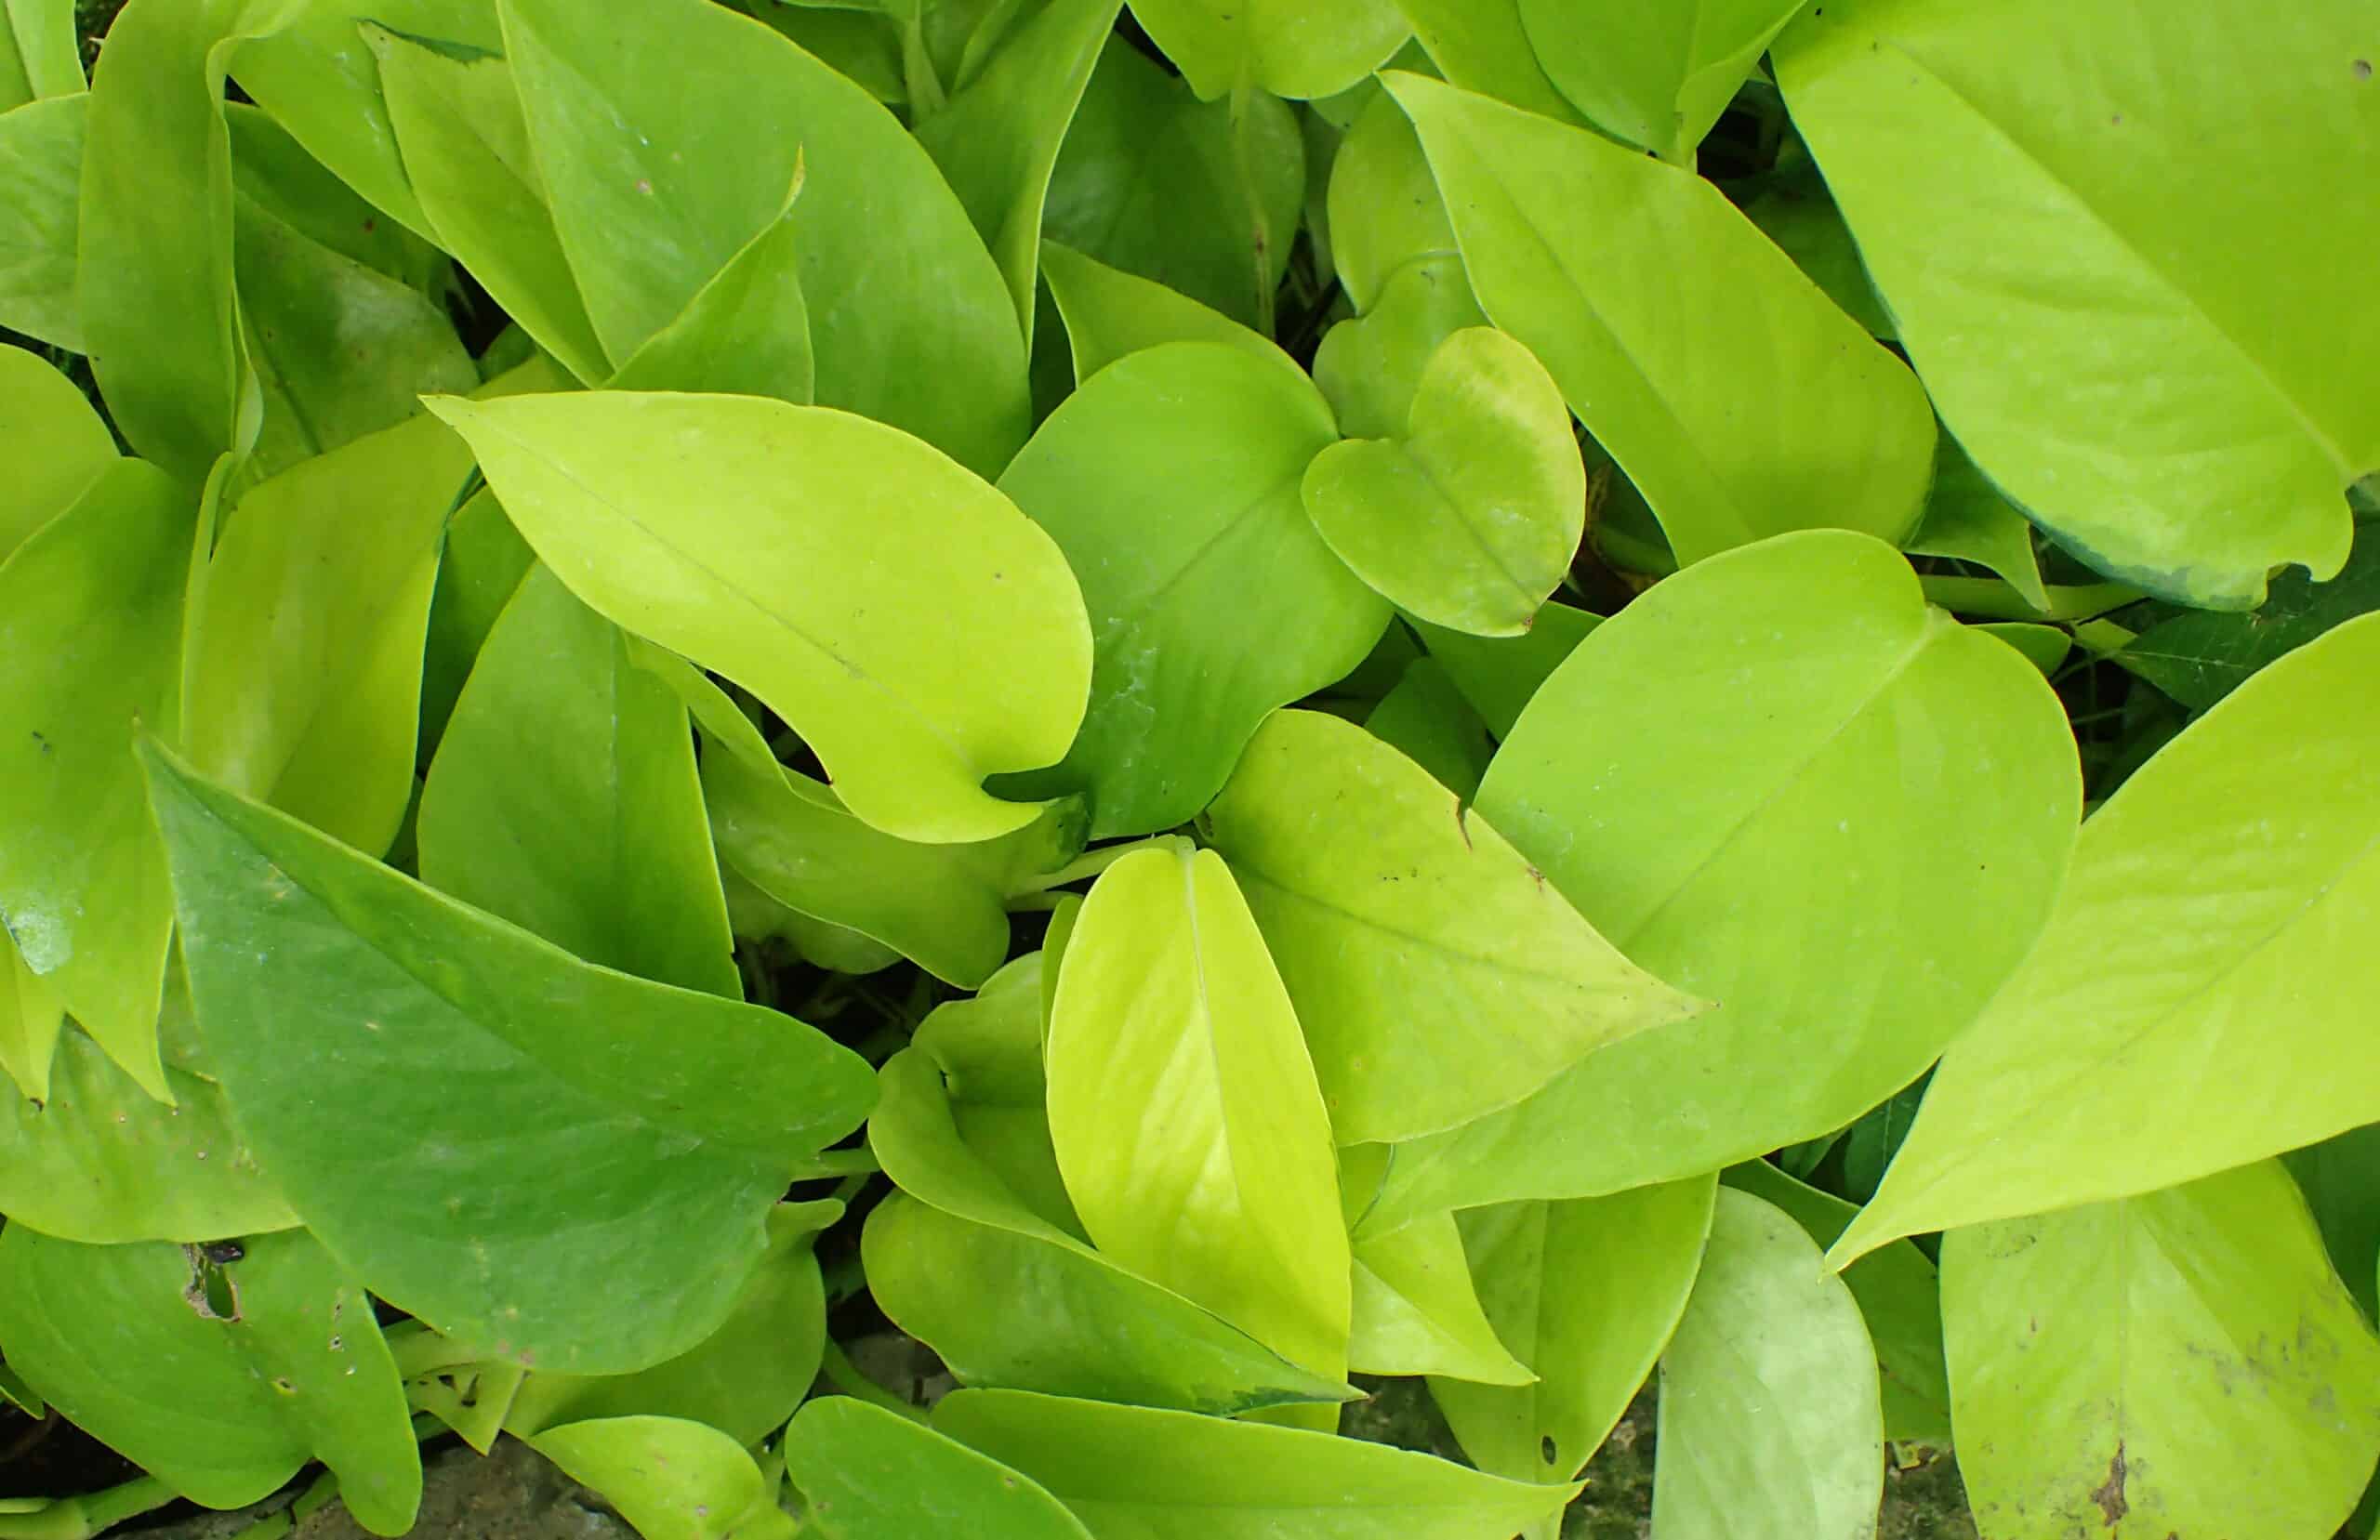 Neon Pothos has yellowish green leaves